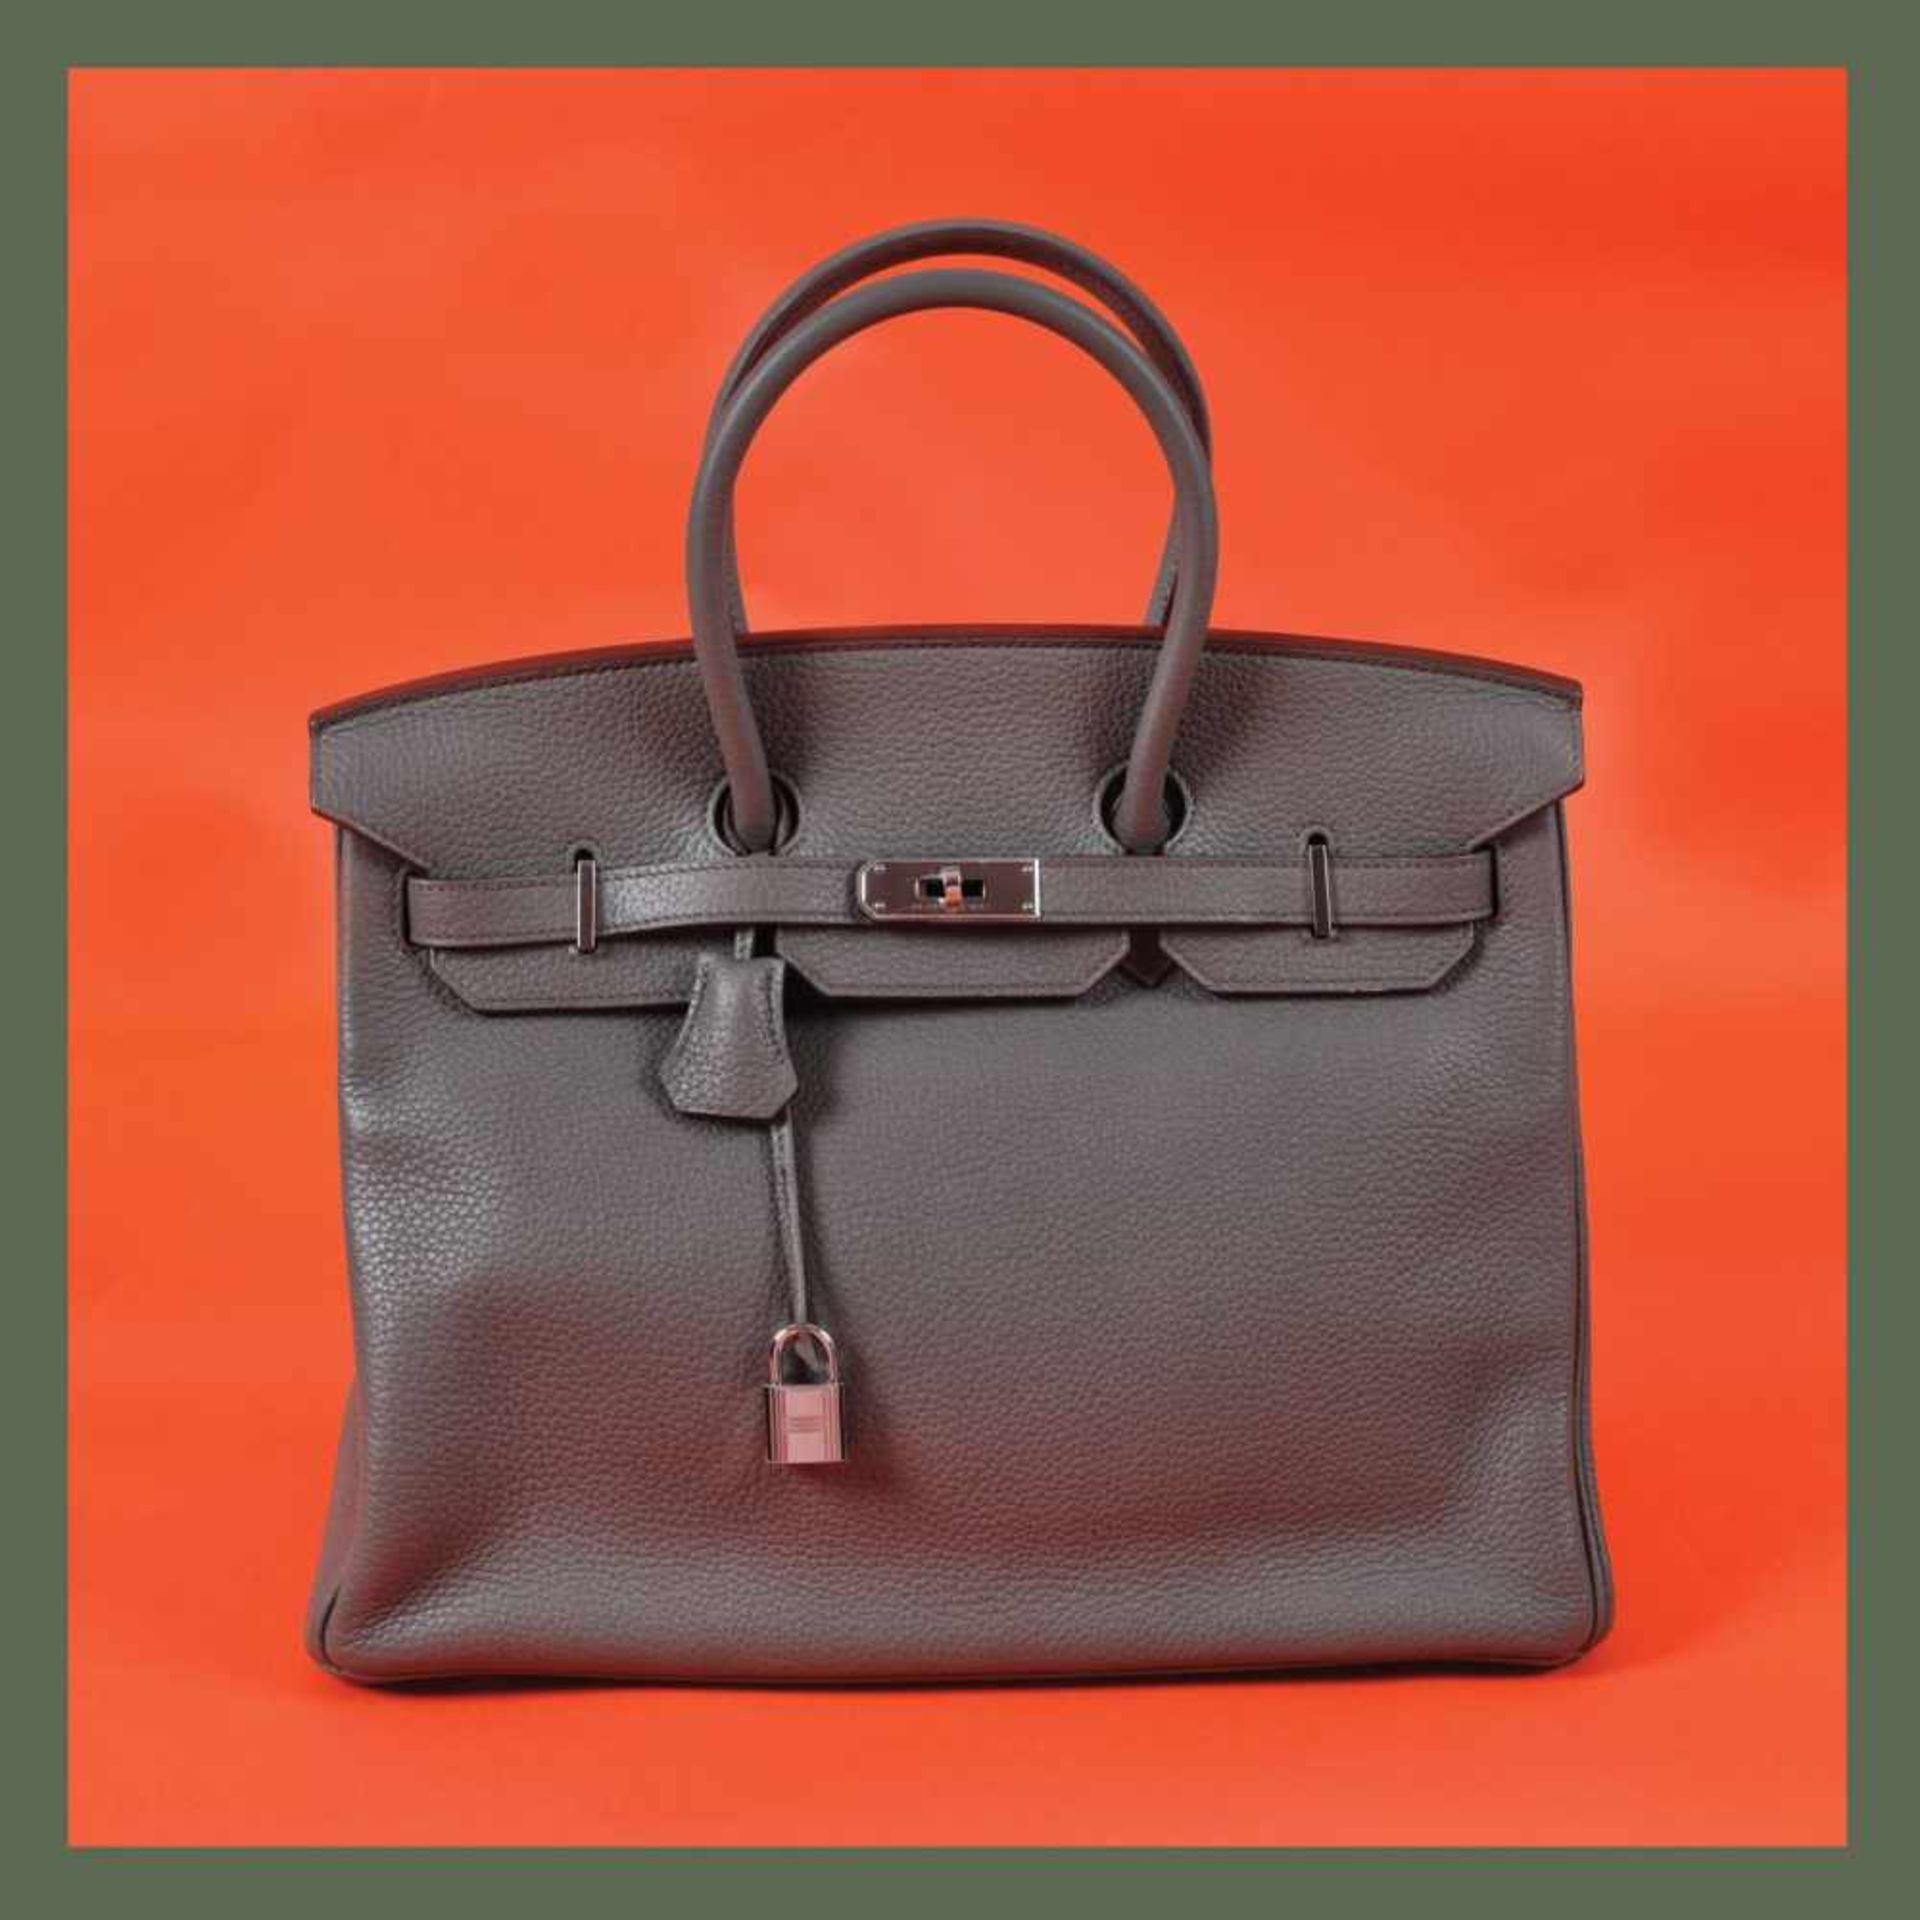 "Birkin 35" - Hermès bag, Clemence leather, colour Etain, for women, accompanied by original box